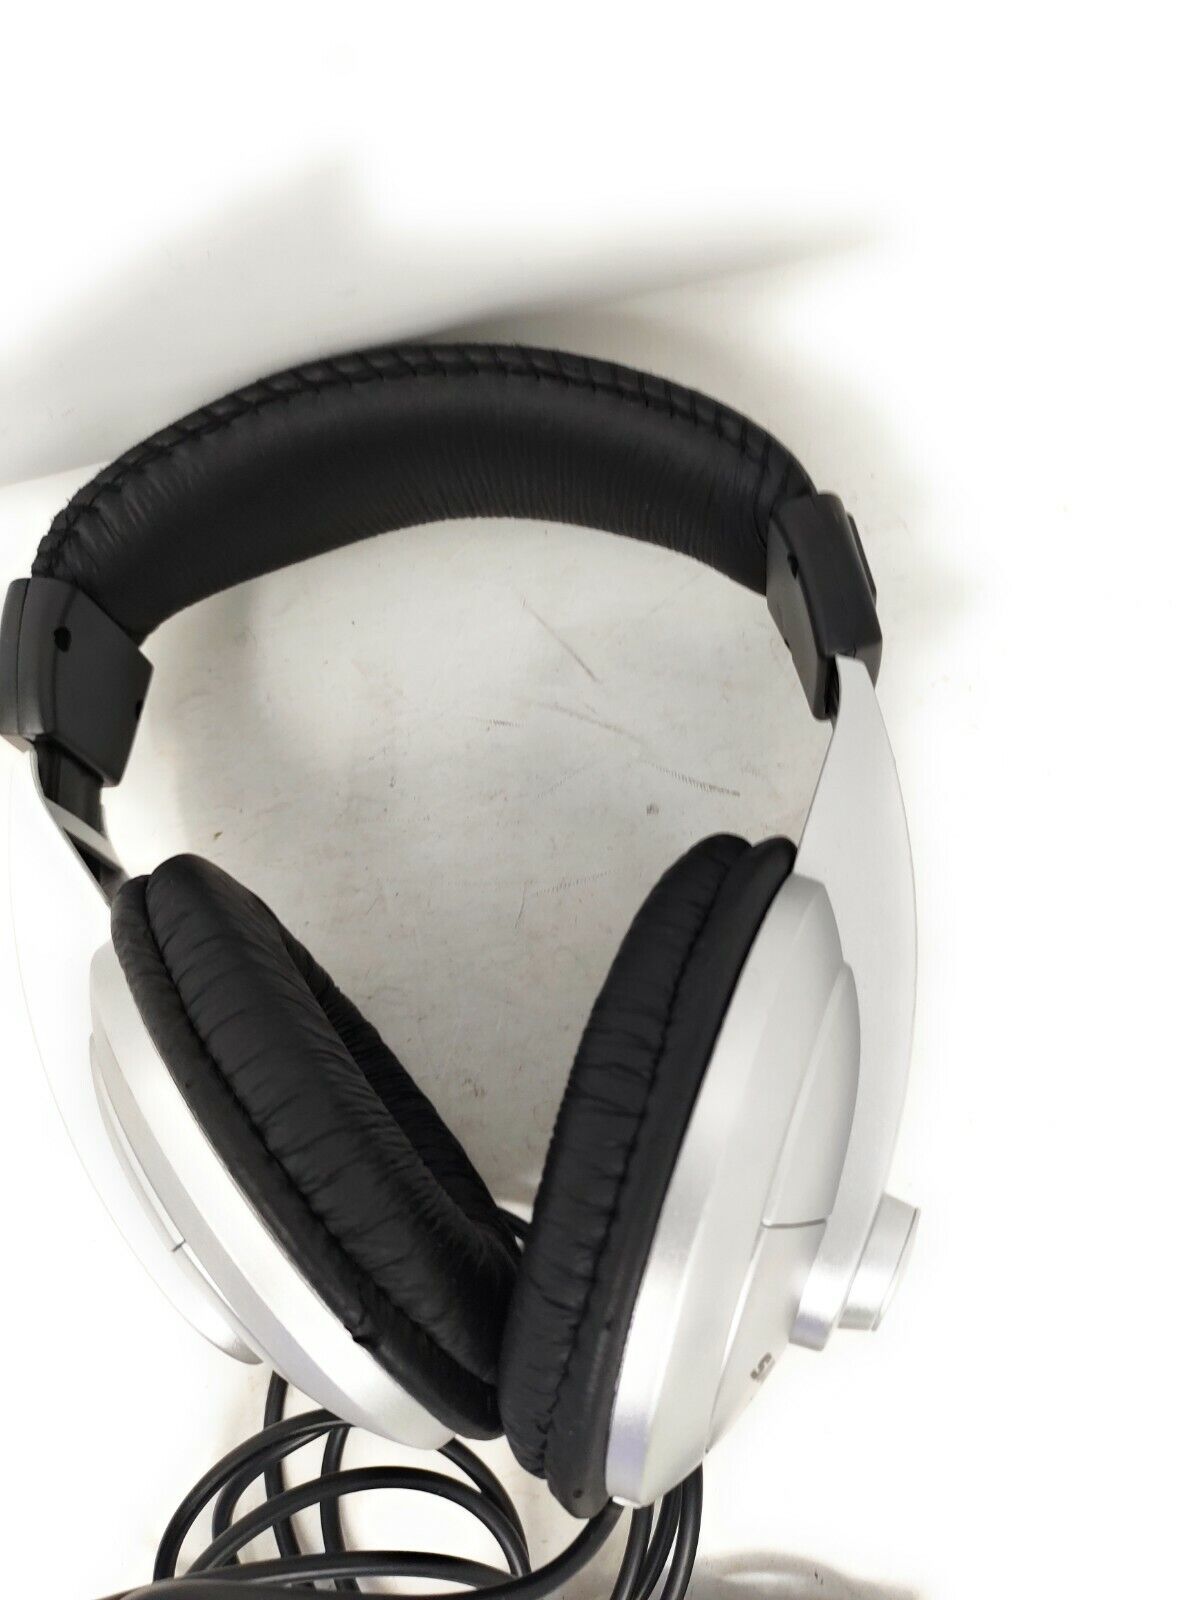 Samson HP30 Stereo Headphones | eBay